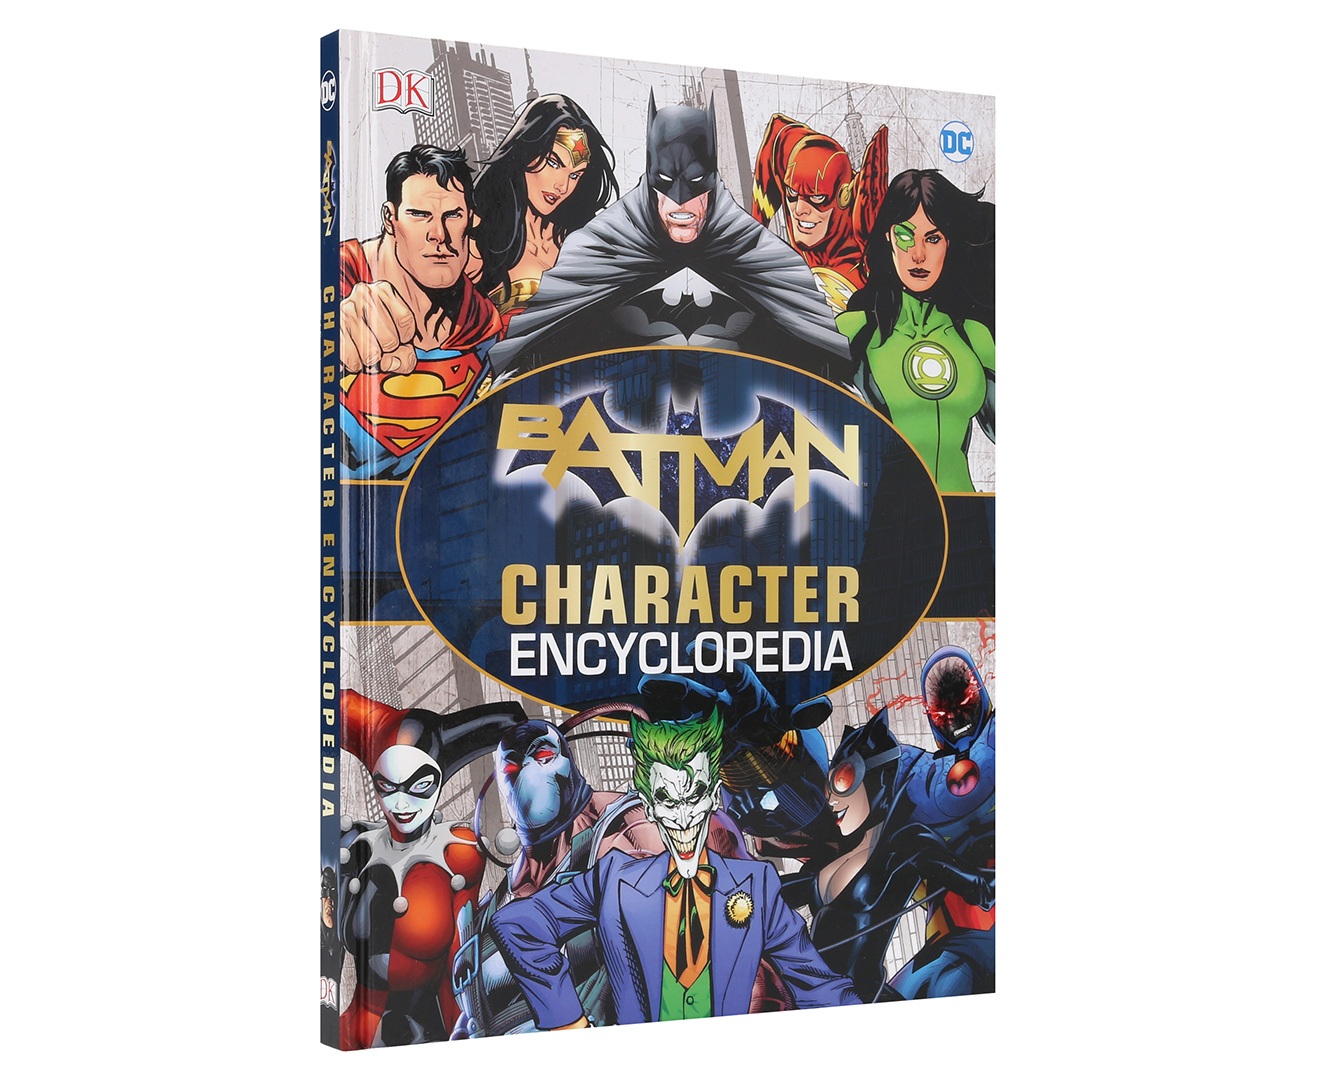 Marvel: Batman Character Encyclopedia Hardcover Book by Matthew K Manning |  